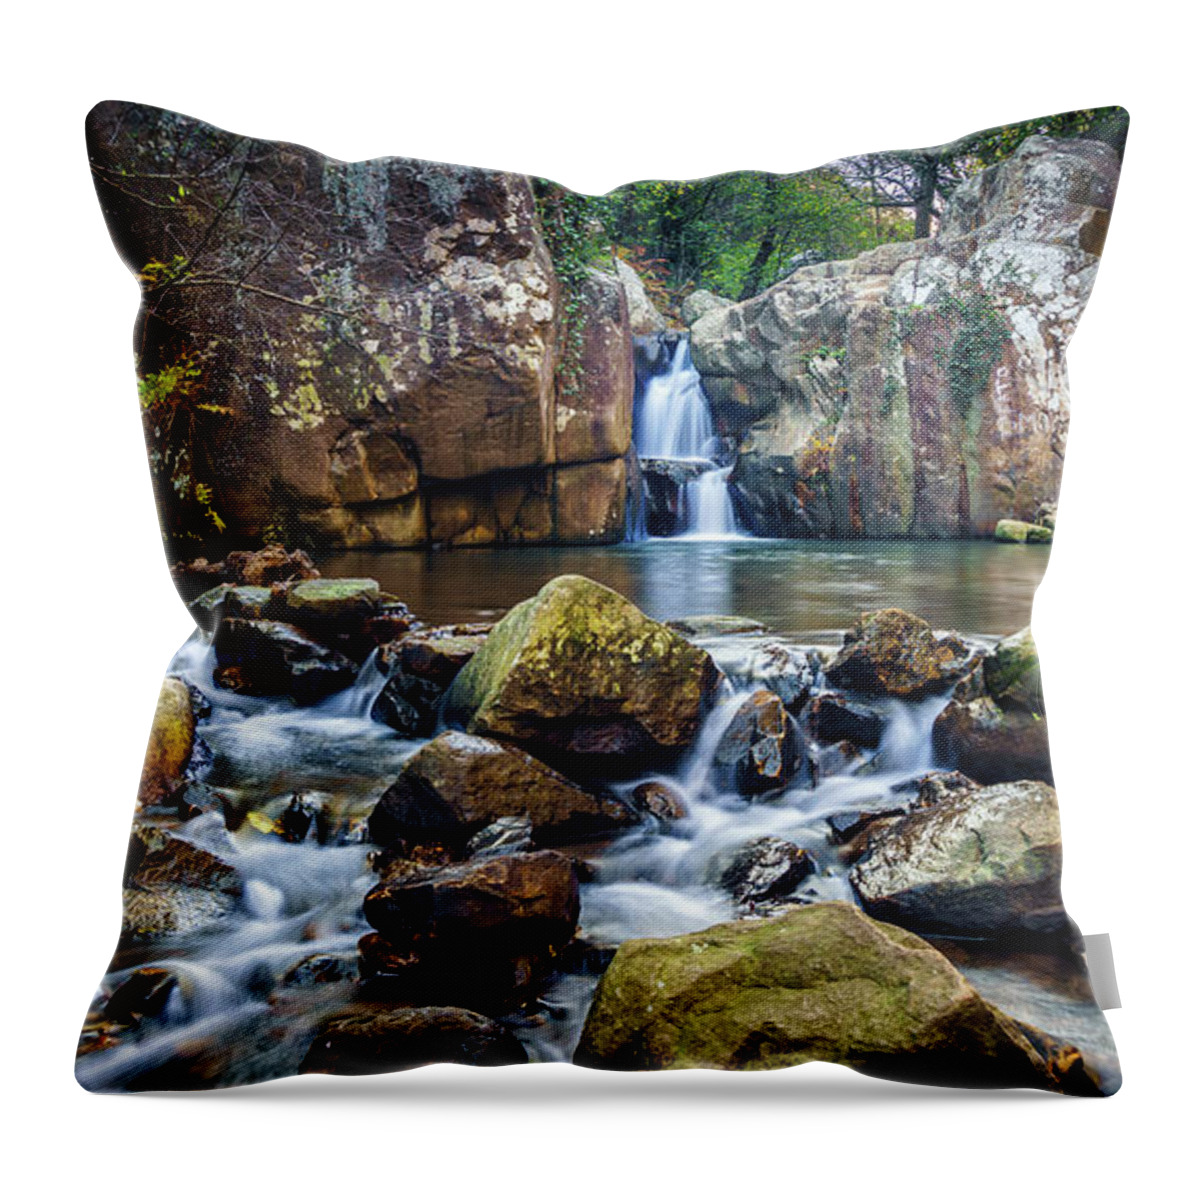 Beautiful Scenery Throw Pillow featuring the photograph River of Honey Waterfall Algeciras Cadiz Spain by Pablo Avanzini